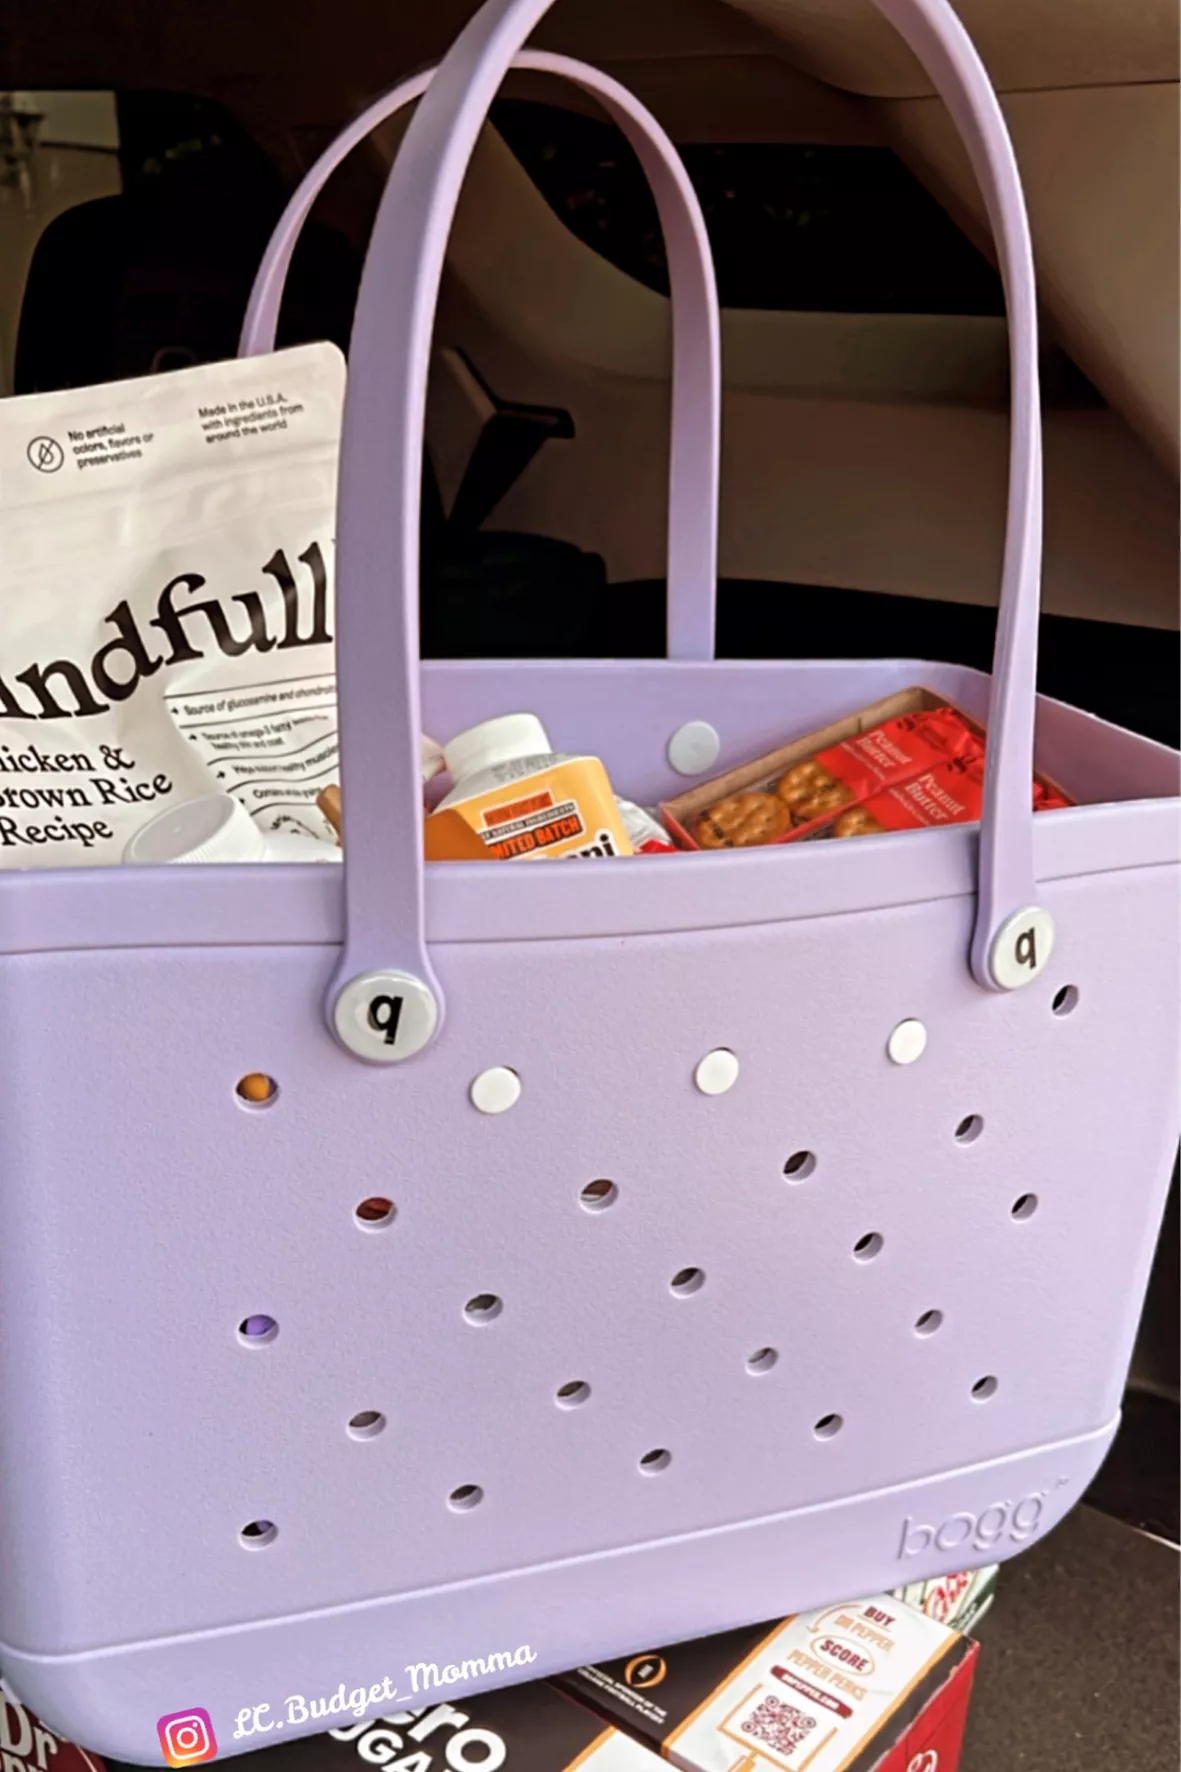 Bogg Bag Original Large Bogg Bag in Lilac Purple